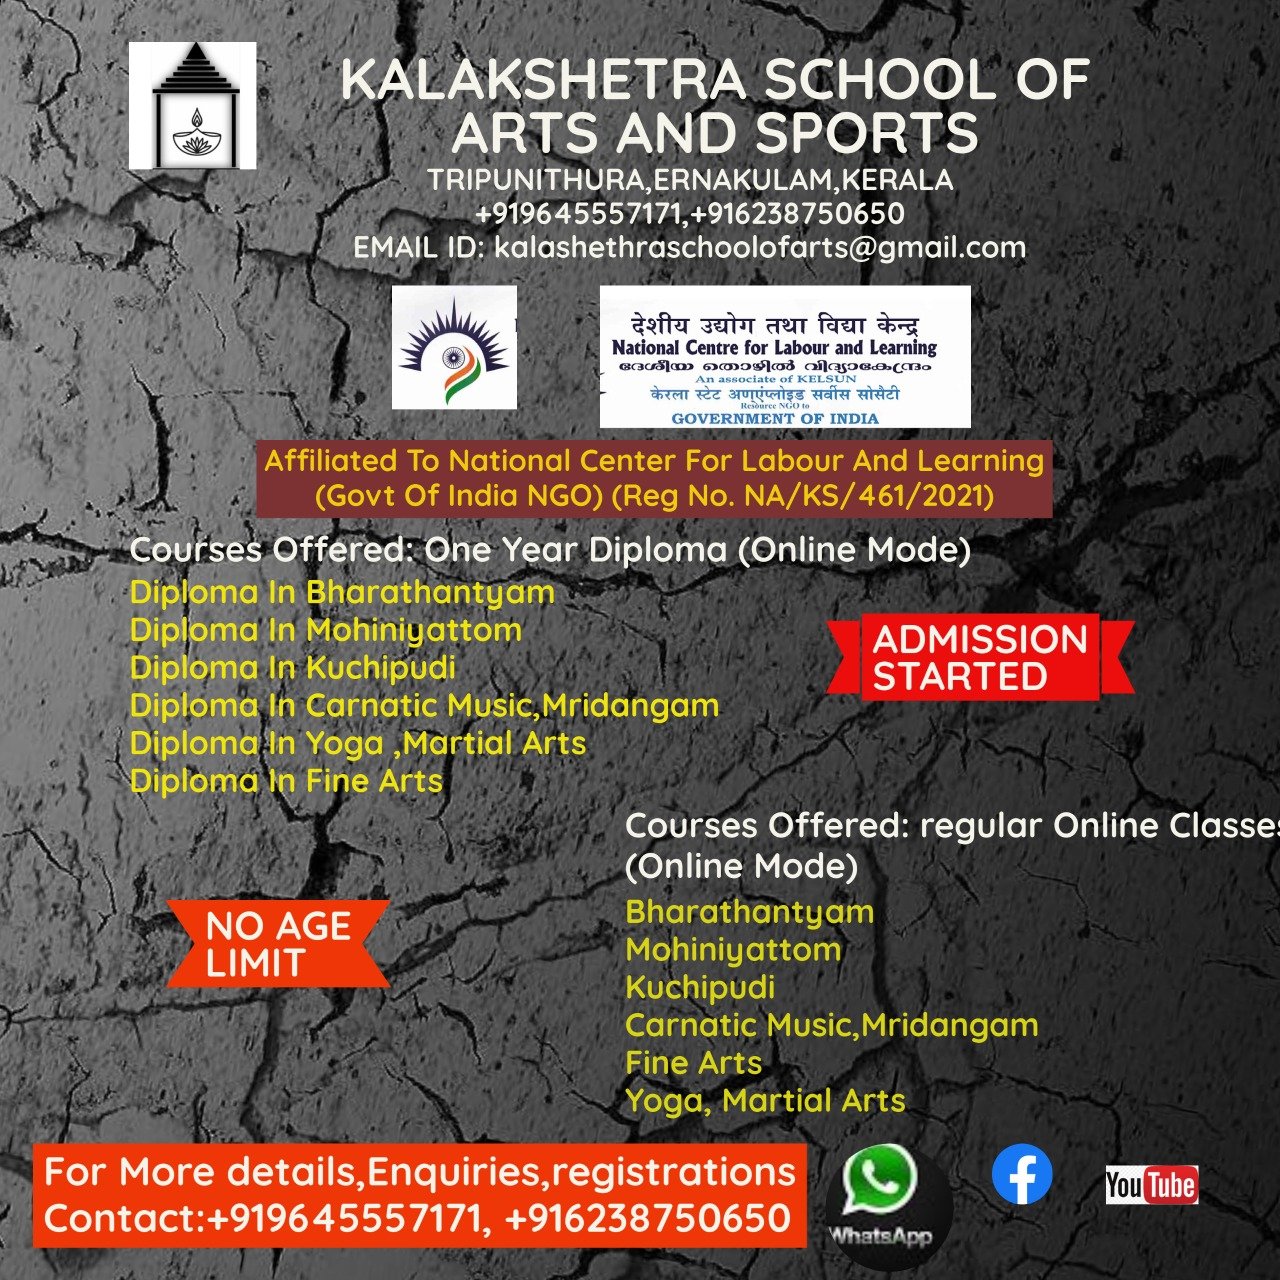 kalakshethra school of arts and sports